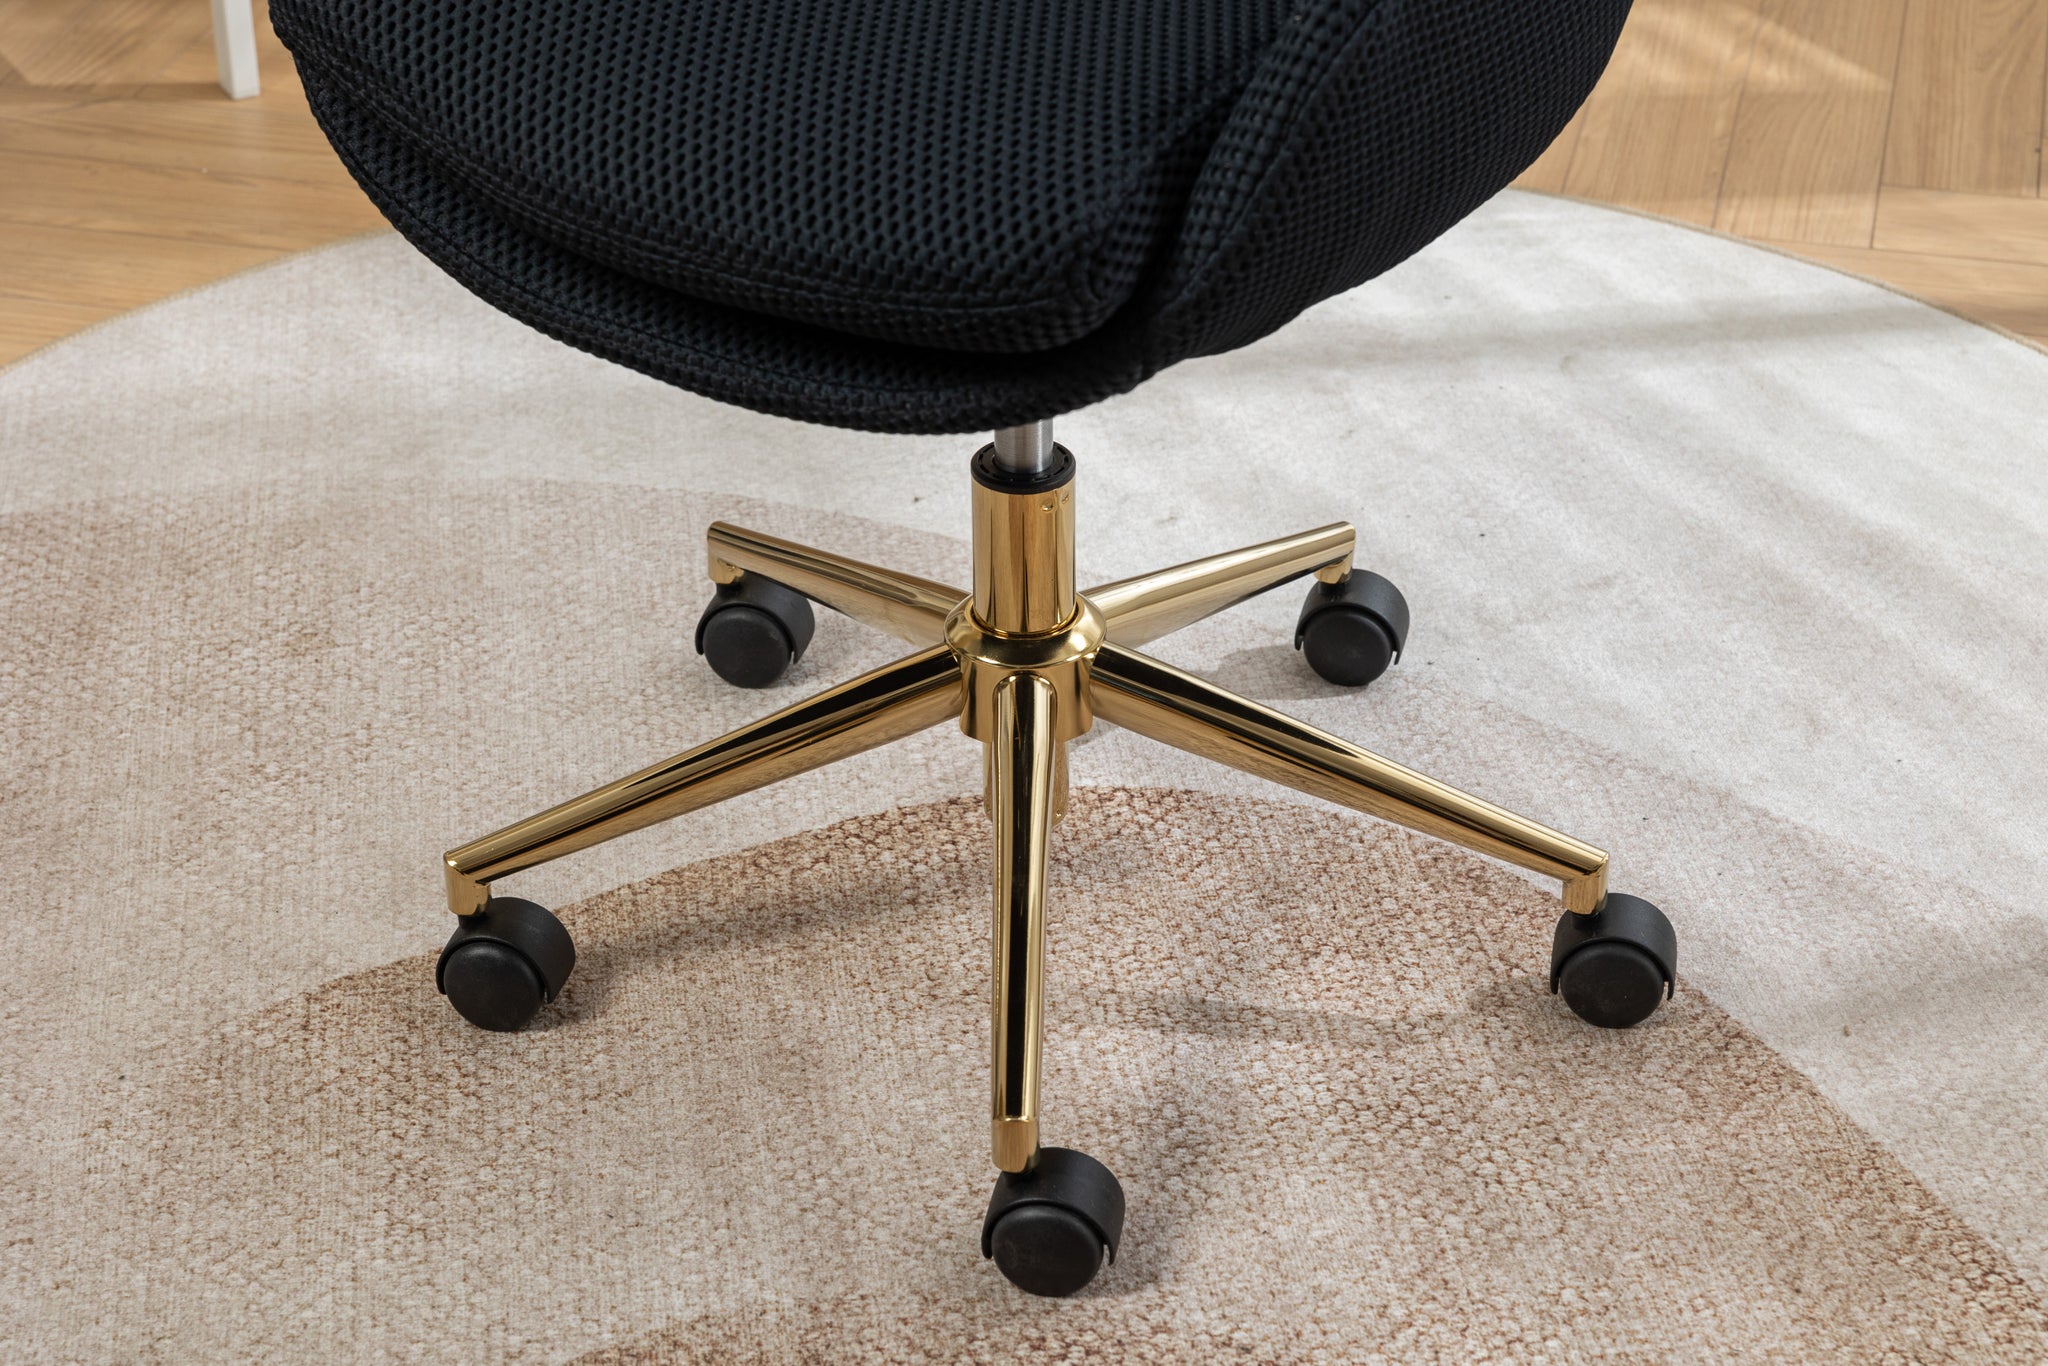 046 Mesh Fabric Home Office 360 Swivel Chair solid-black-office-sponge-wipe